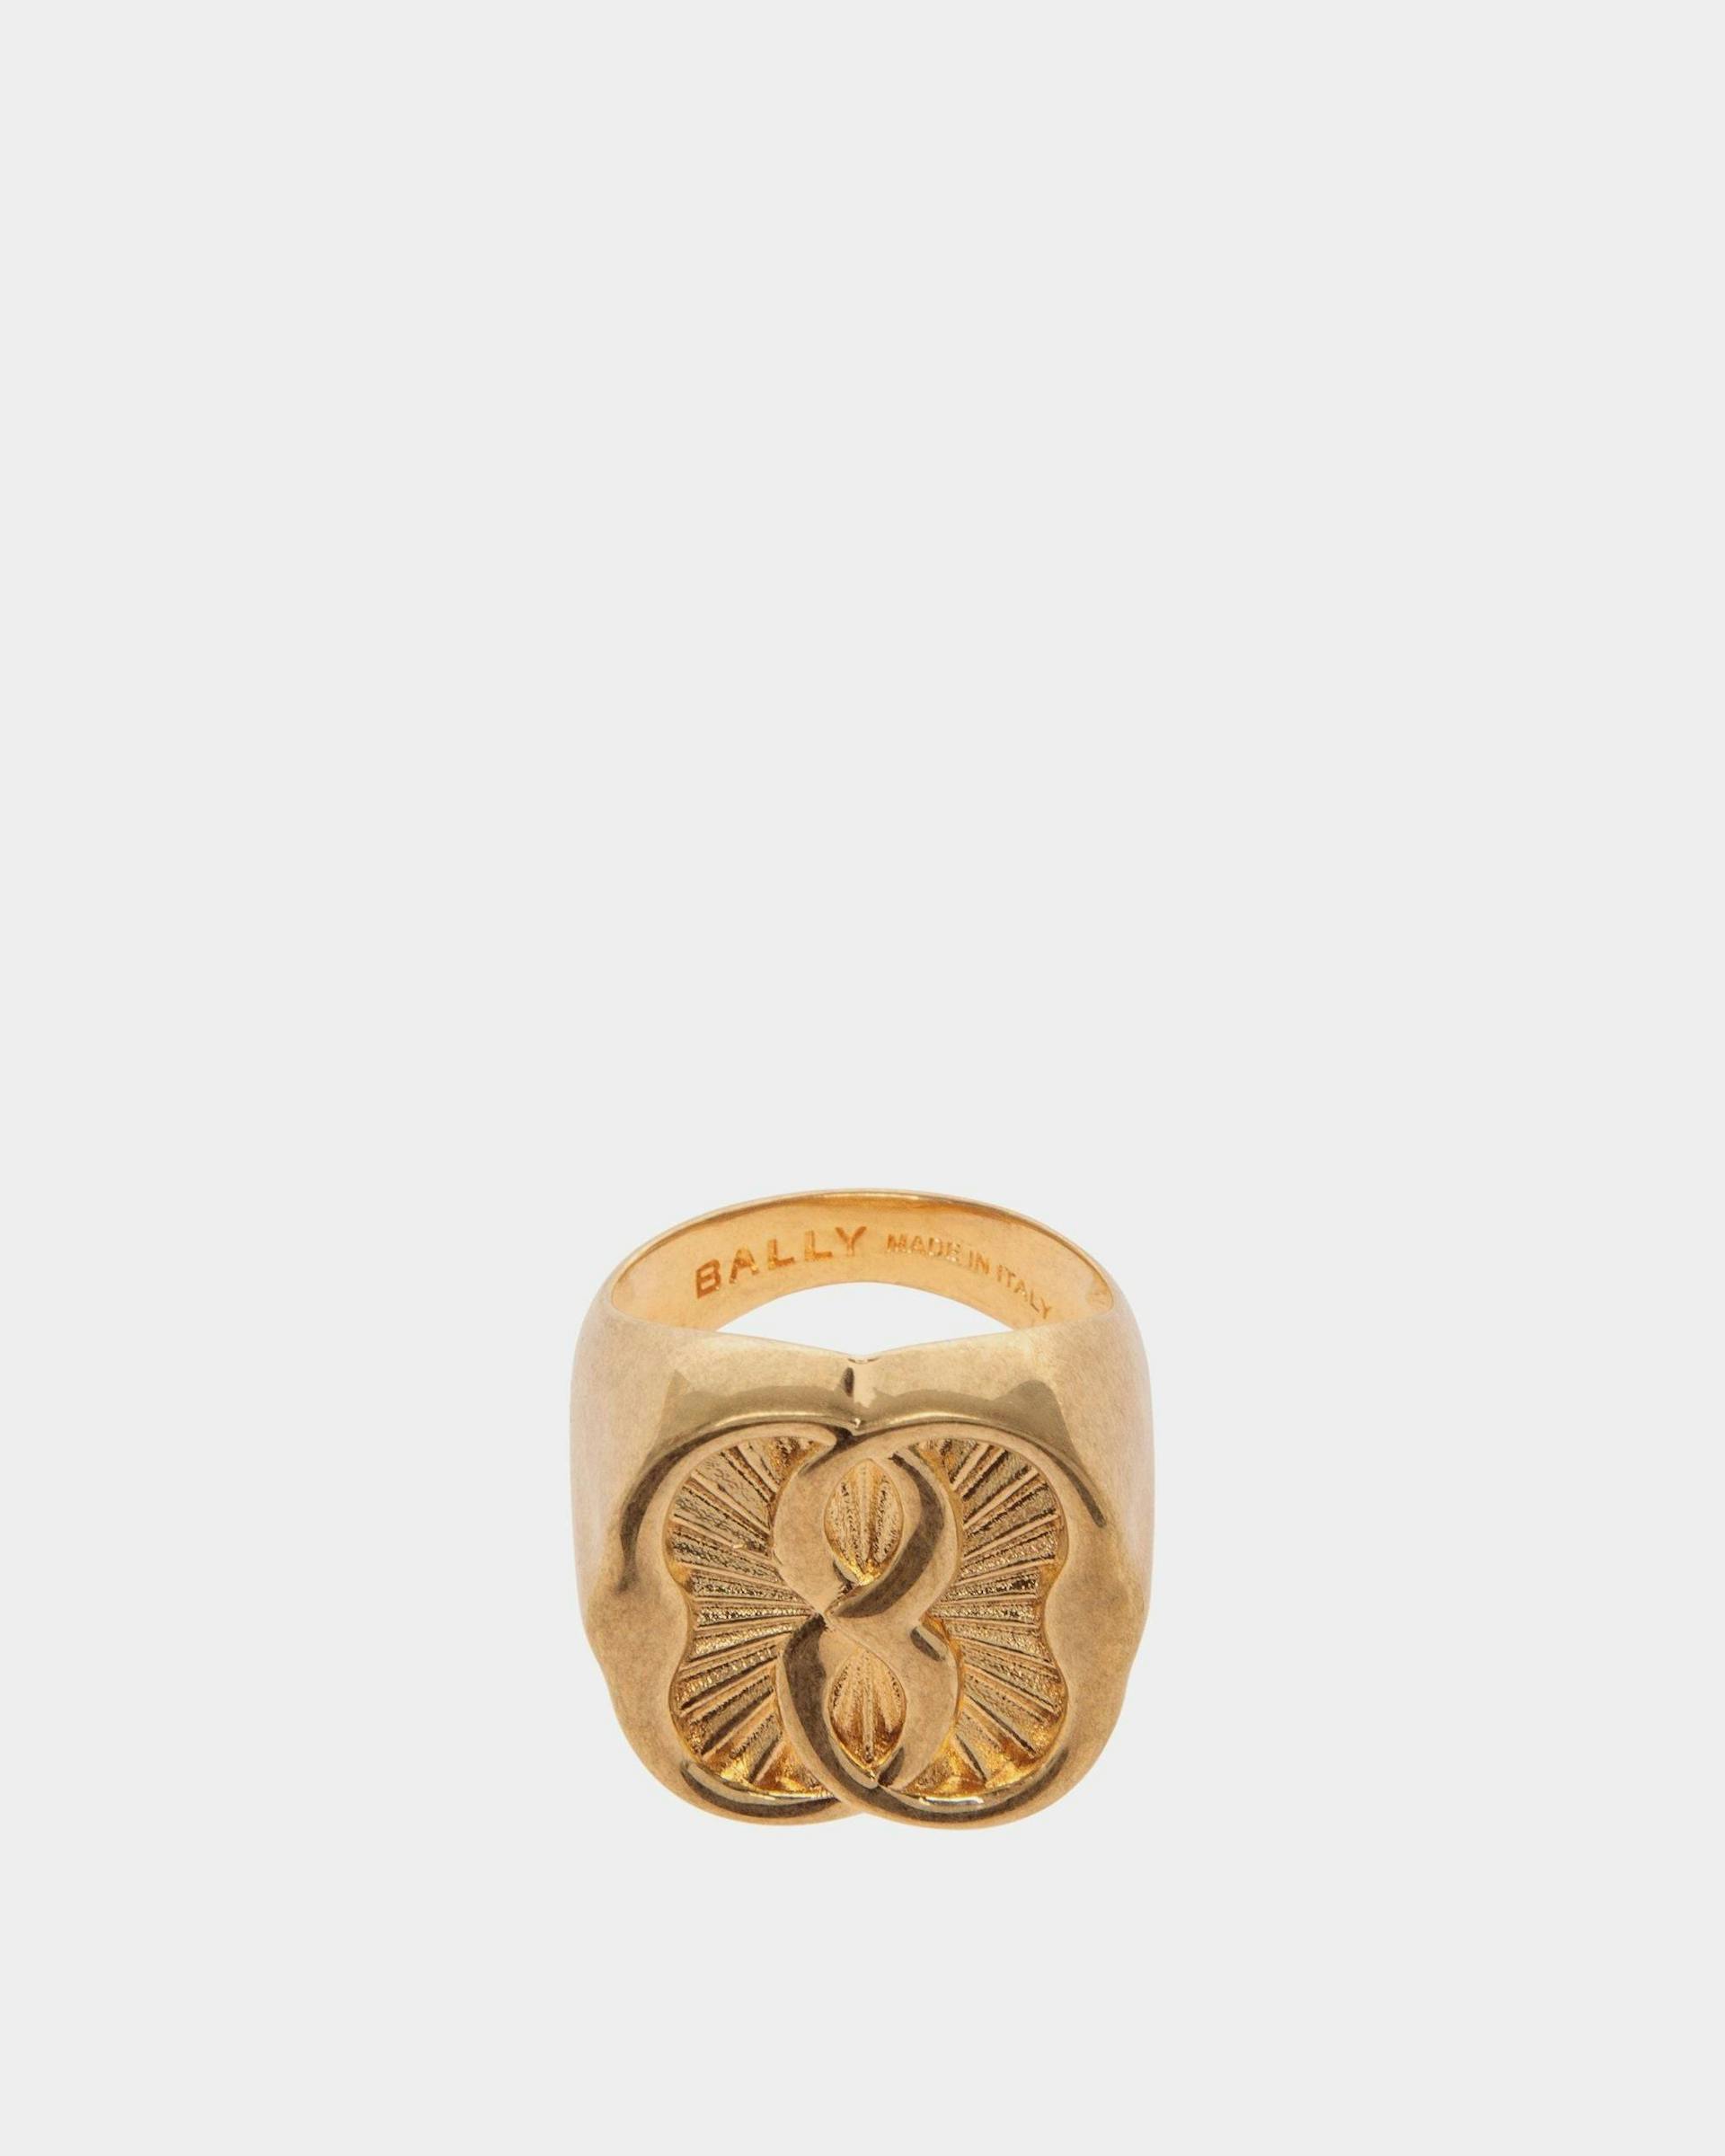 Women's Emblem Ring in Gold Eco Brass | Bally | Still Life Open / Inside